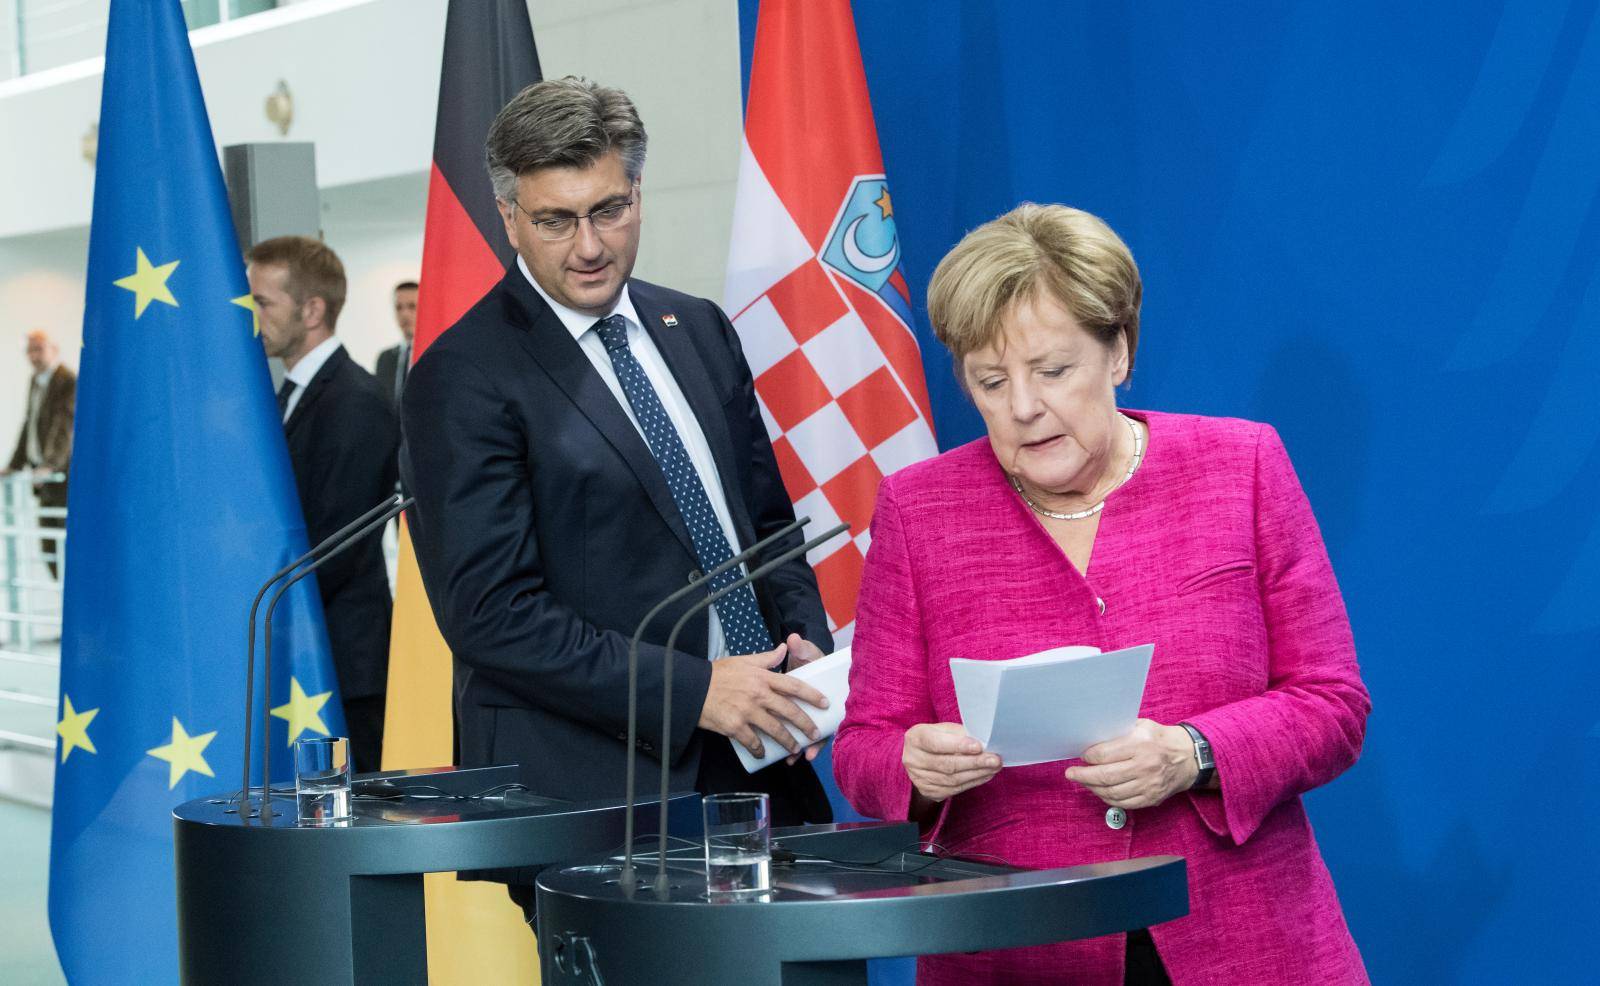 Croatian Prime Minister meets Merkel